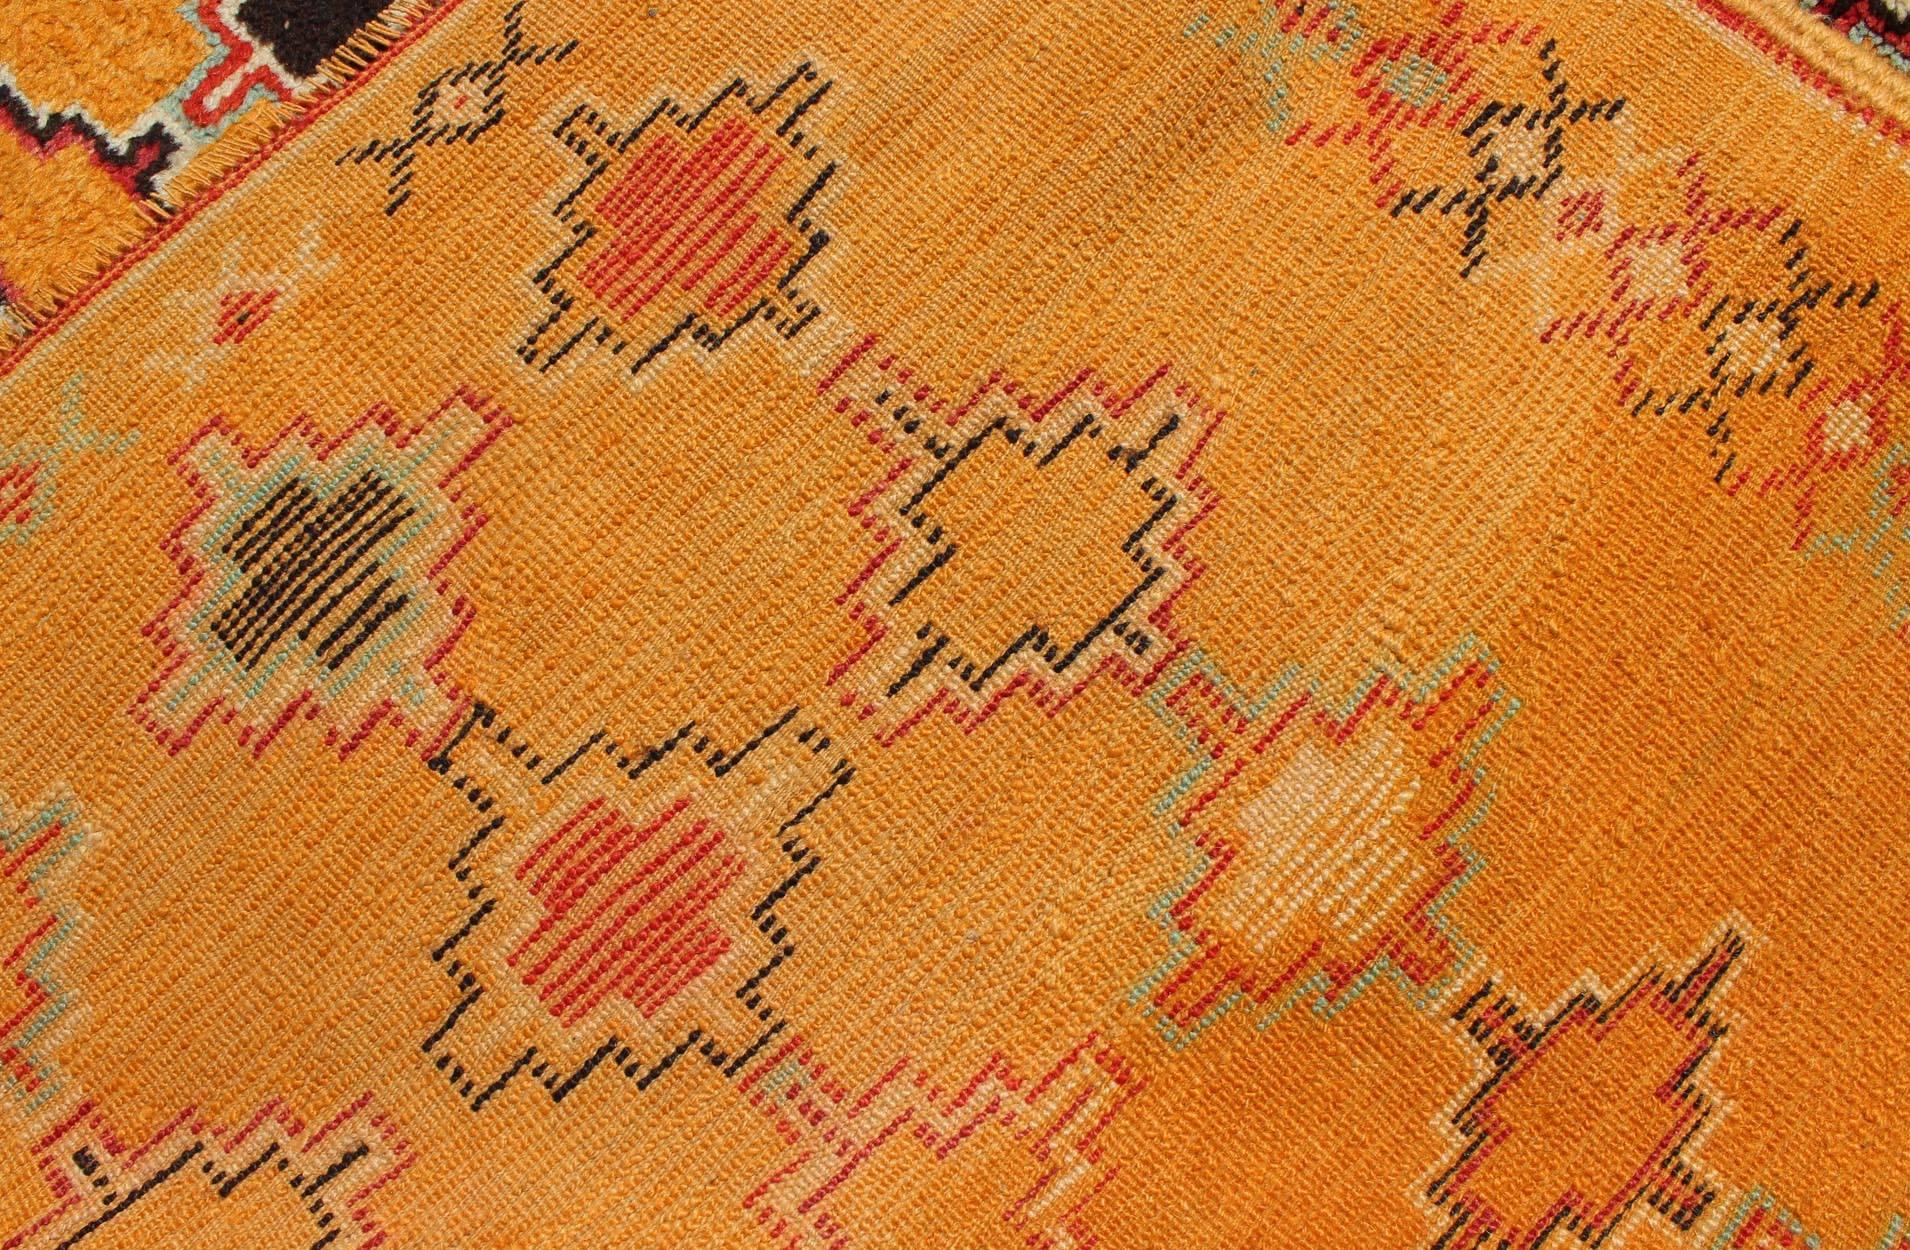 Saffron Colored Antique Moroccan Carpet with Geometric and Diamond Pattern  For Sale 3